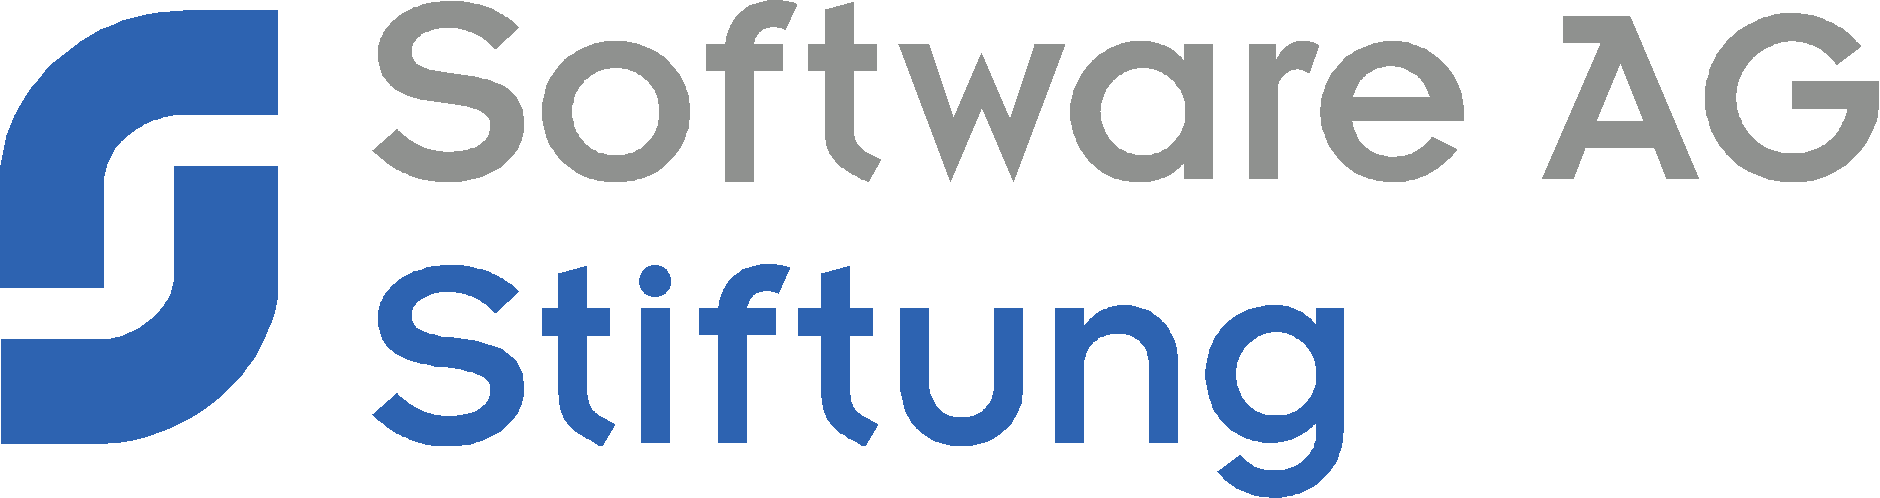 Software AG stiftung logo